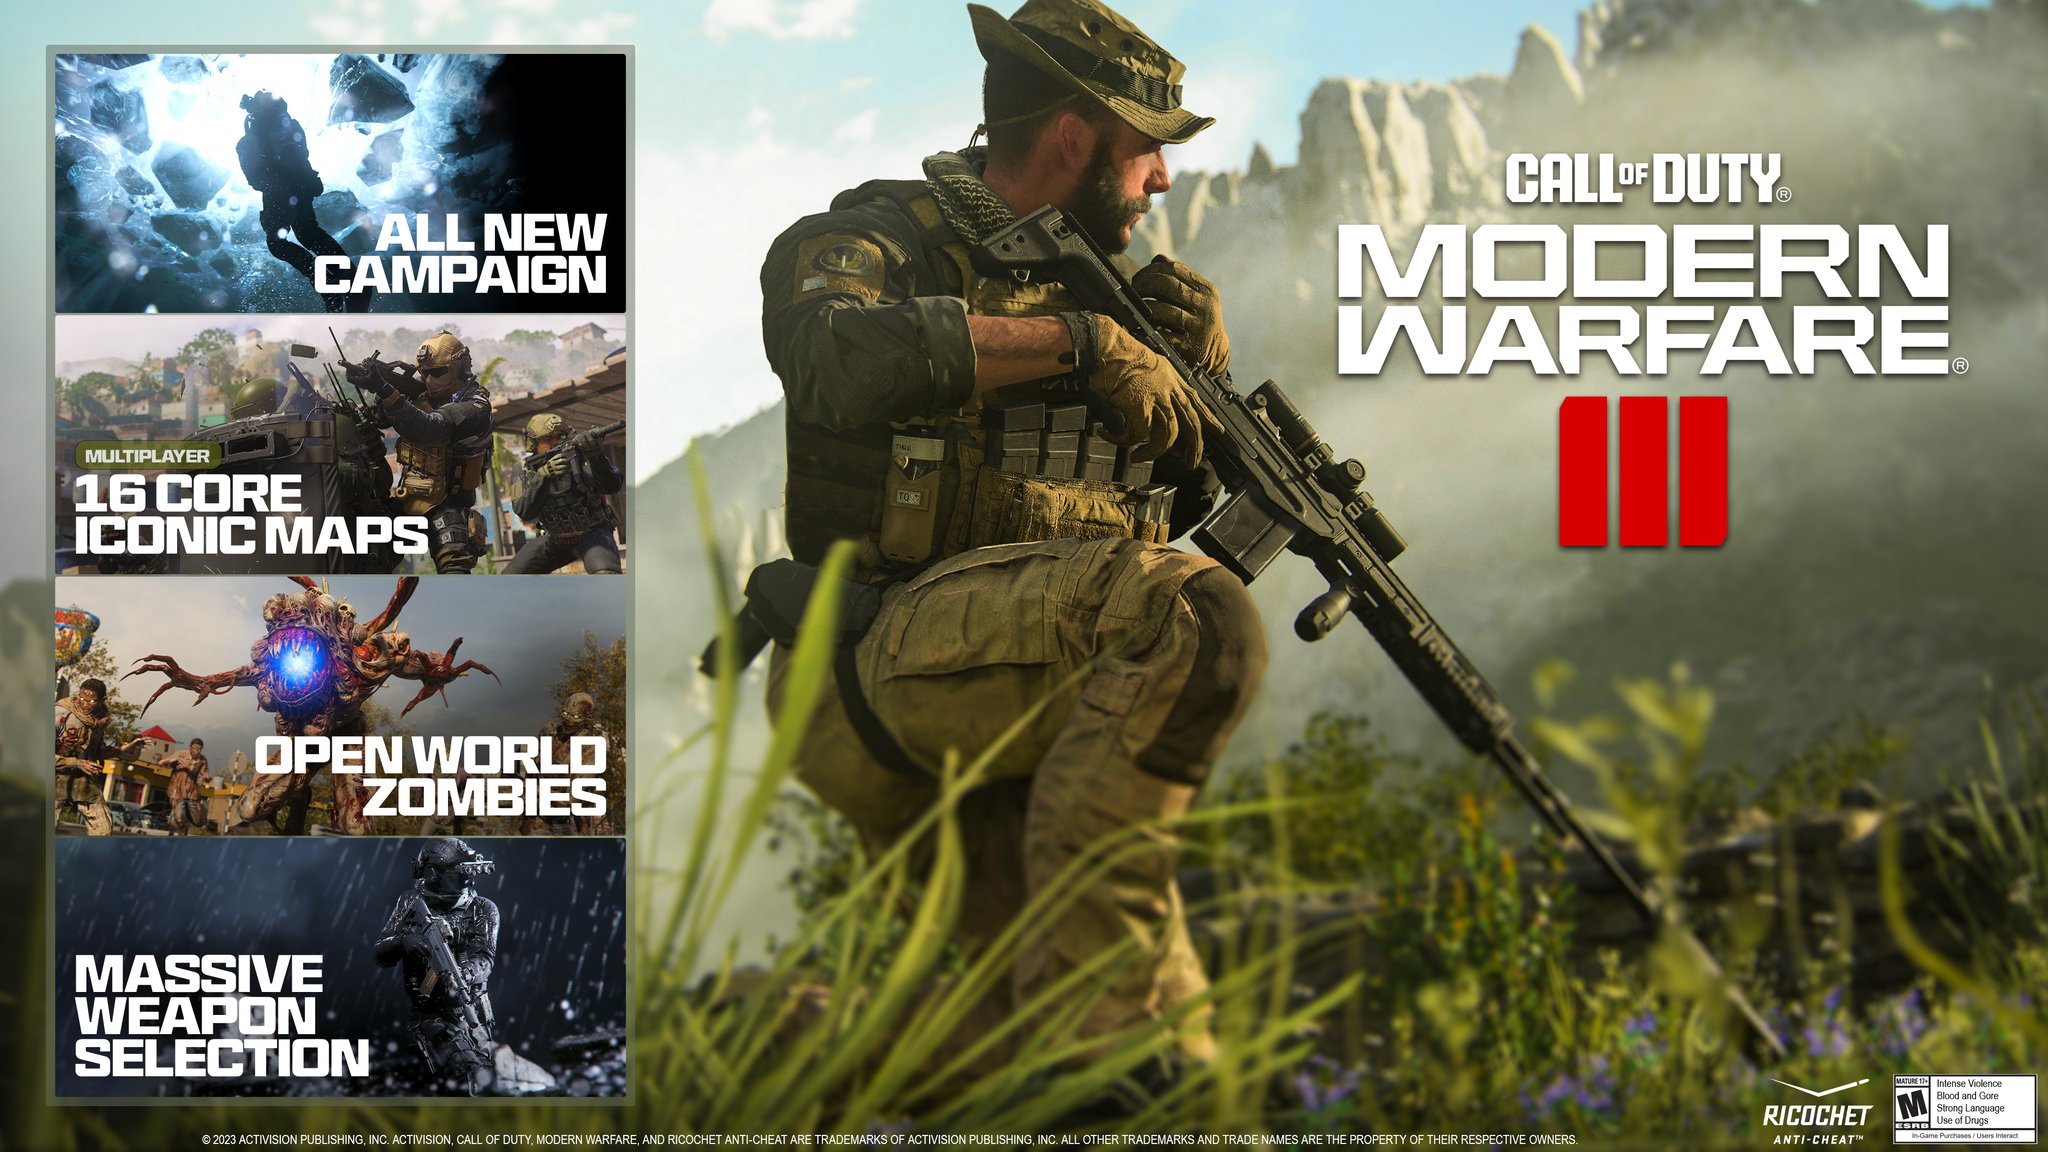 Call of Duty on X: A dark new chapter begins in Modern Warfare